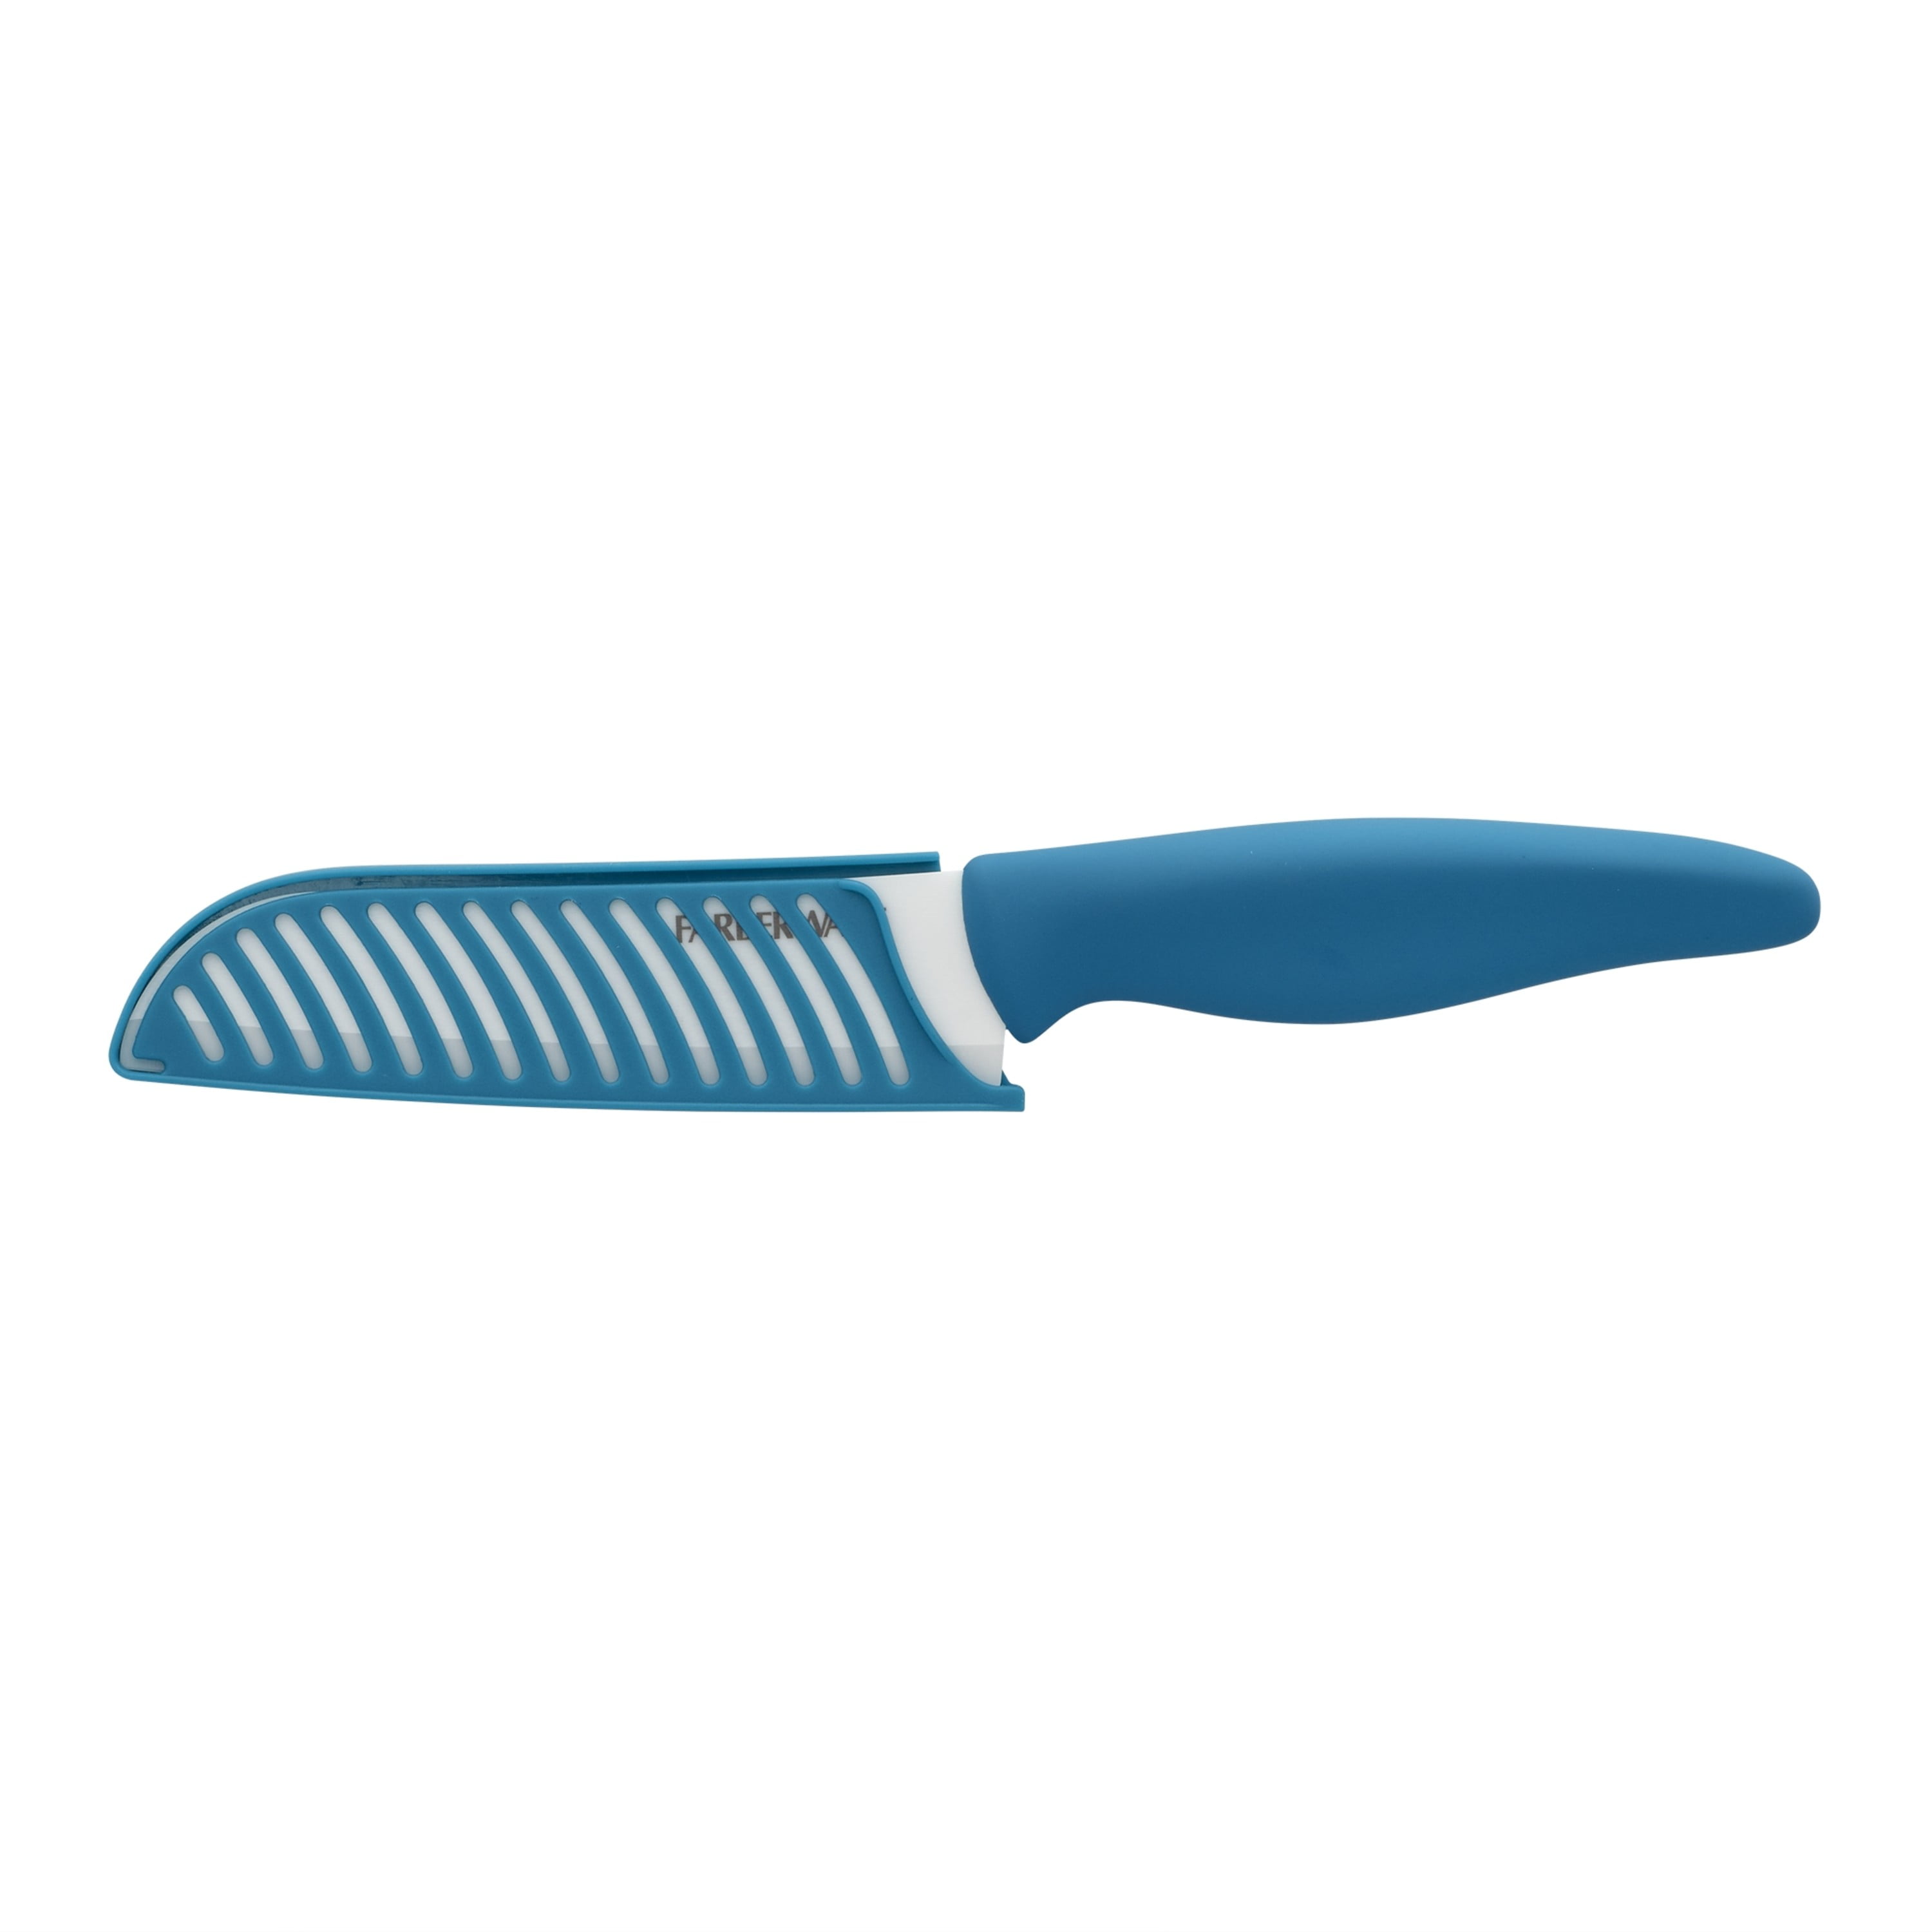 Farberware Ceramic 5-Inch Santoku Knife With Custom-Fit Blade